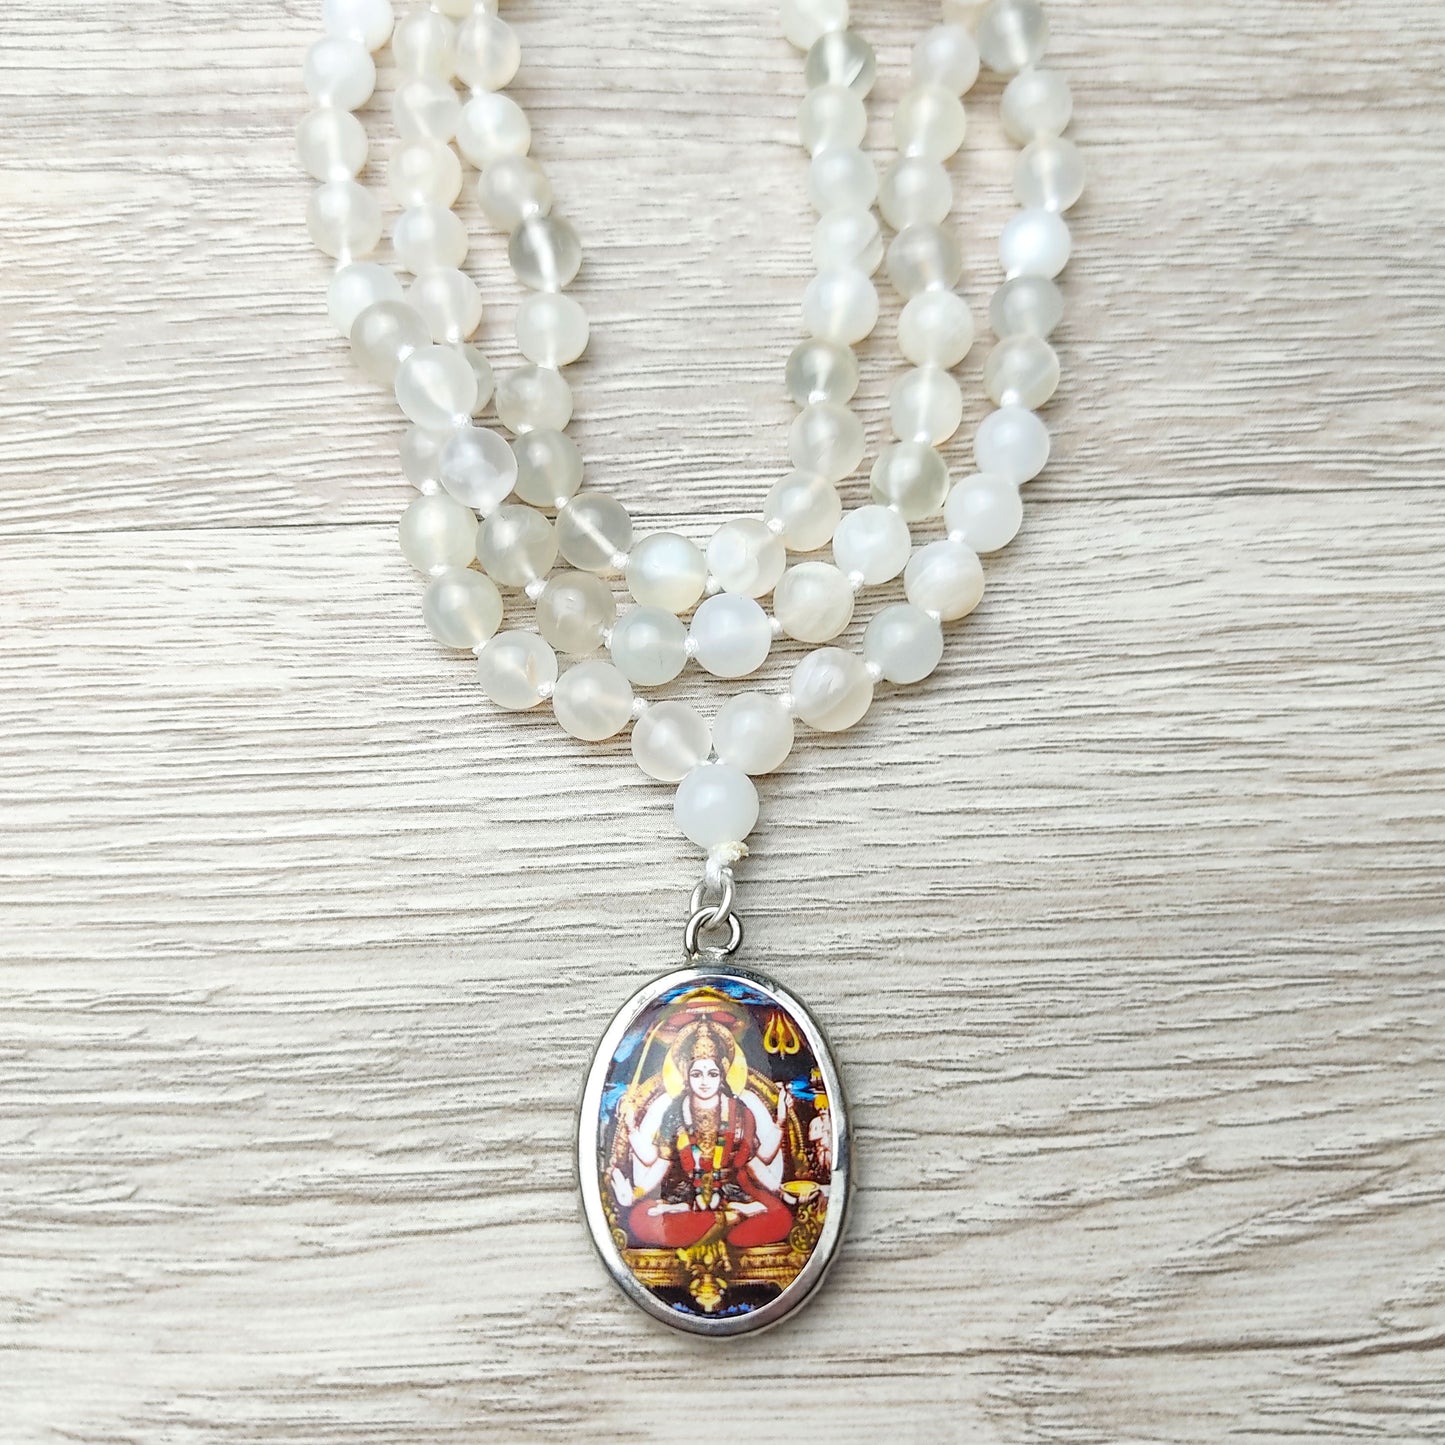 Real Moonstone Beads Necklace with India Goddess Durga Devi Pendant Yoga Gift